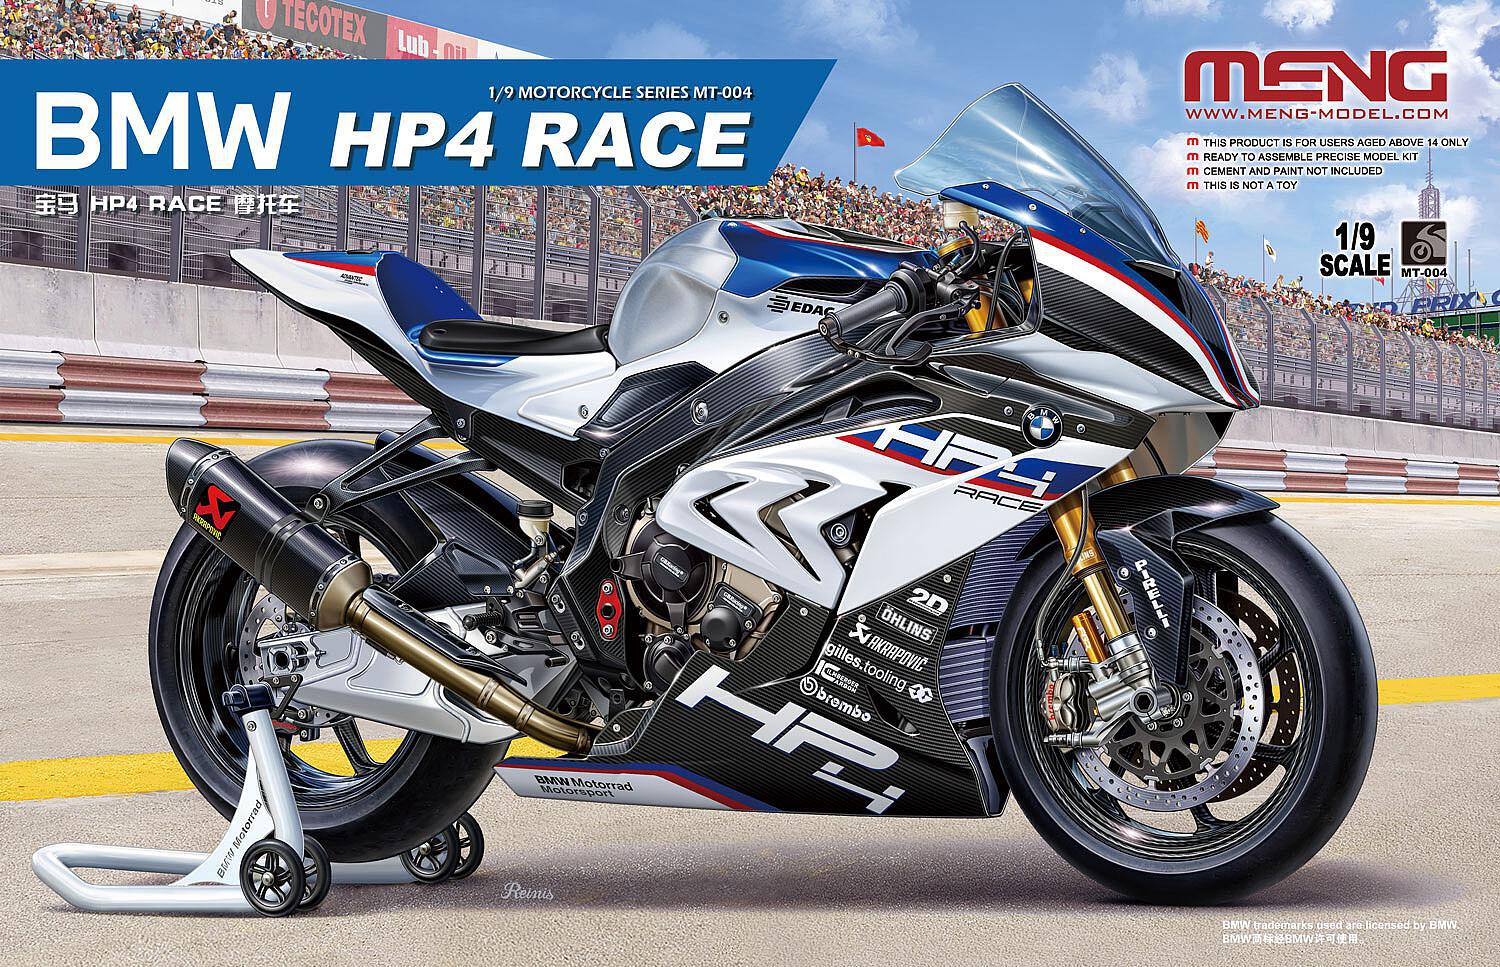 meng-MT-004-1-BMW-HP4-Race-Superbike-215PS-BMW-Motorrad-Kartonage